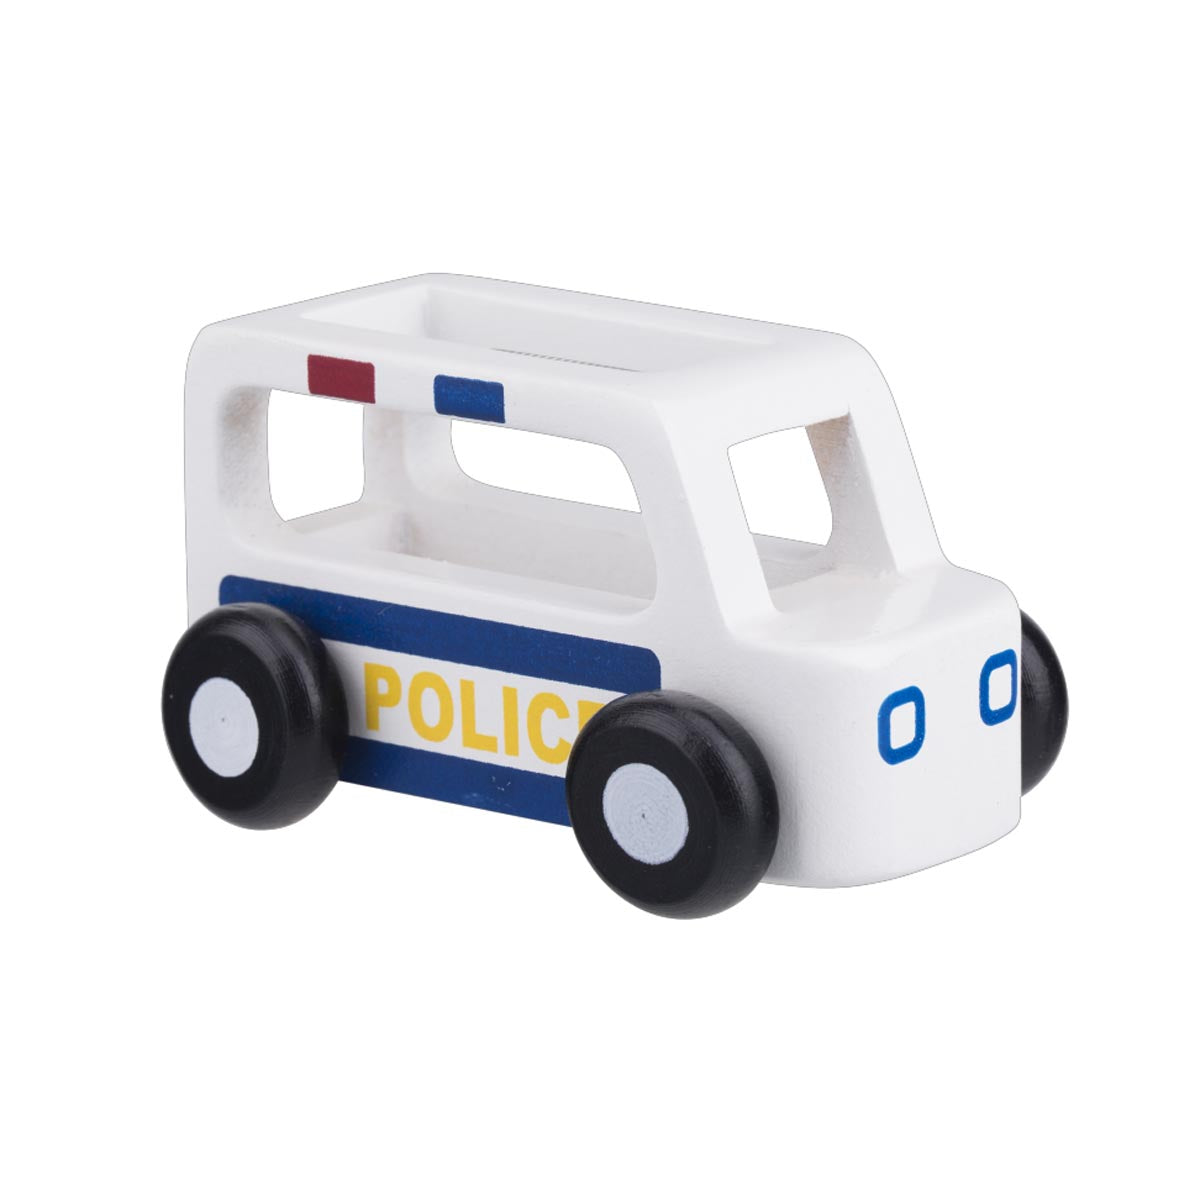 Moover Mini Cars - Police